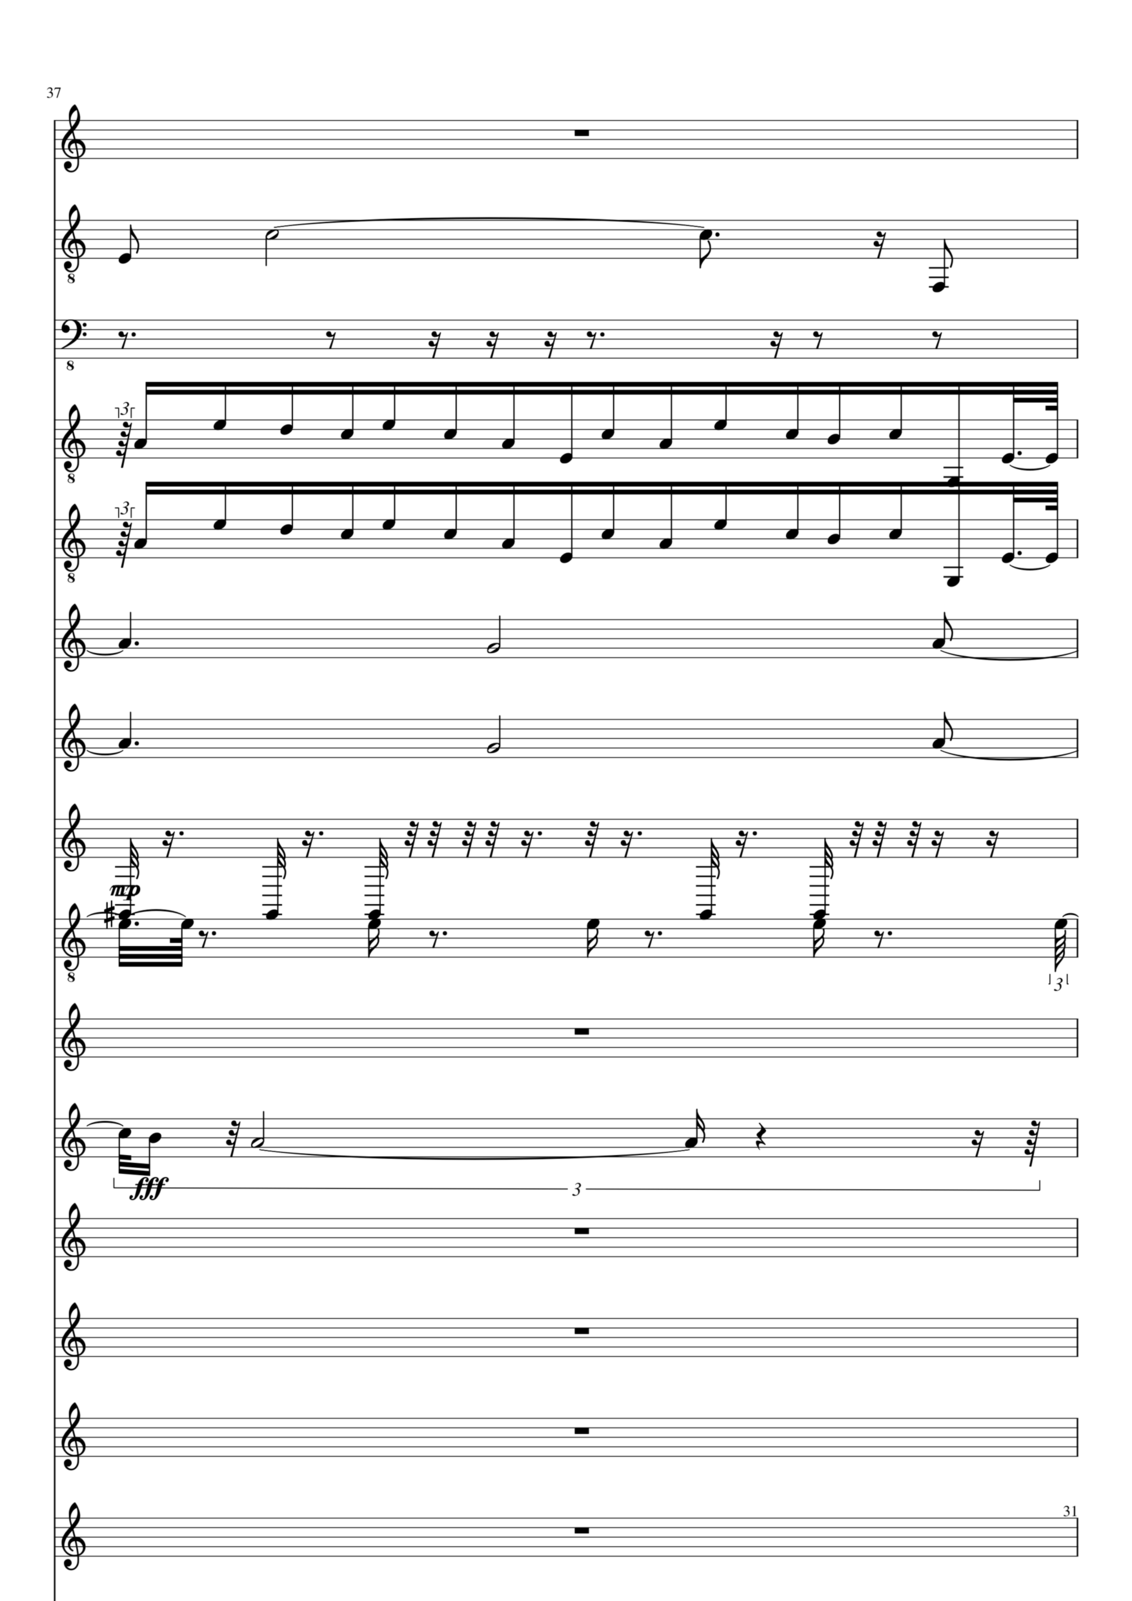 Gorod, kotorogo net slide, Image 9